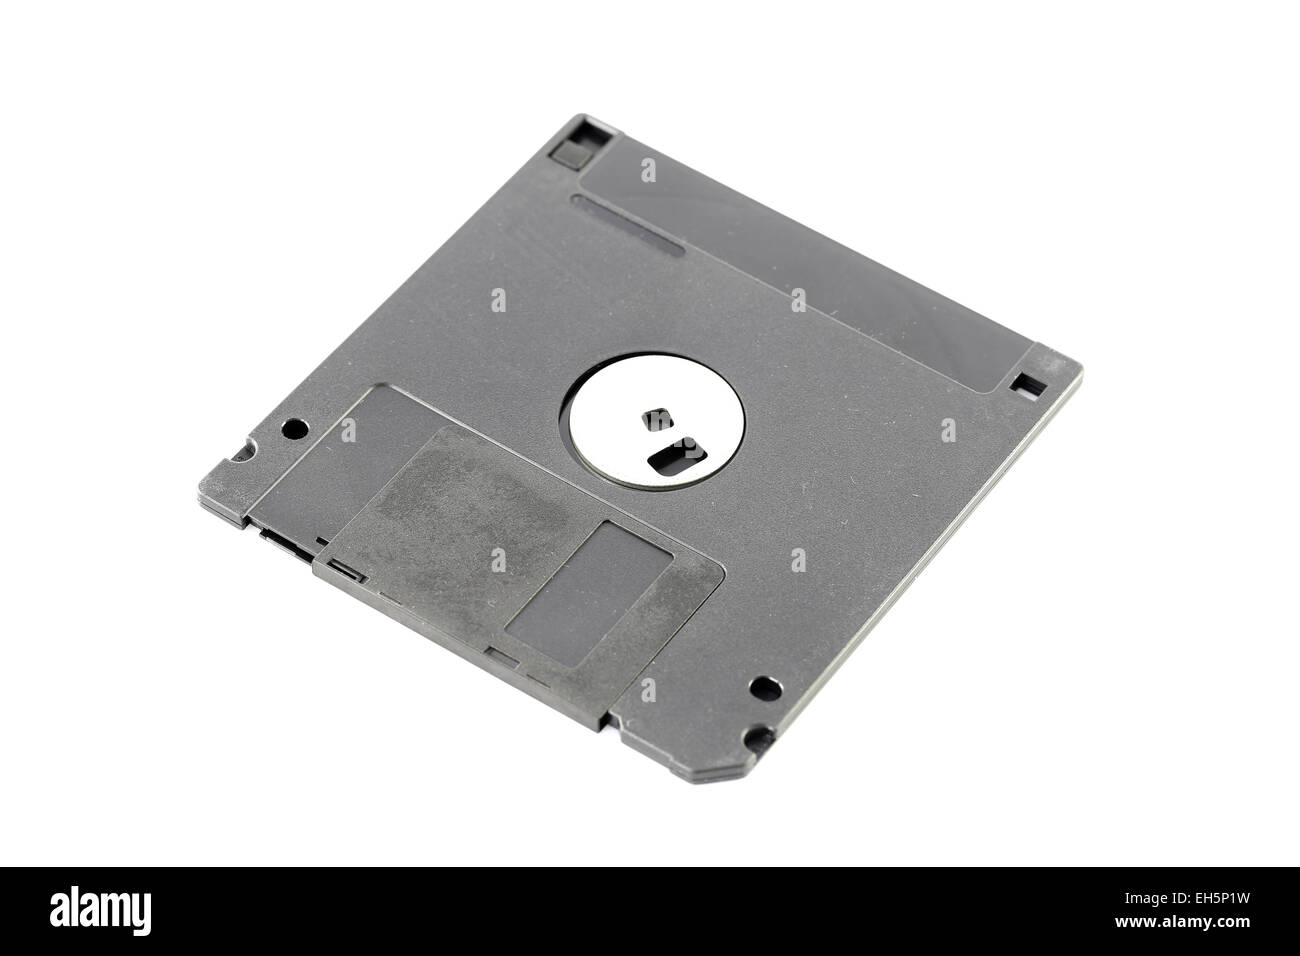 Black floppy disk isolated on white background. Stock Photo